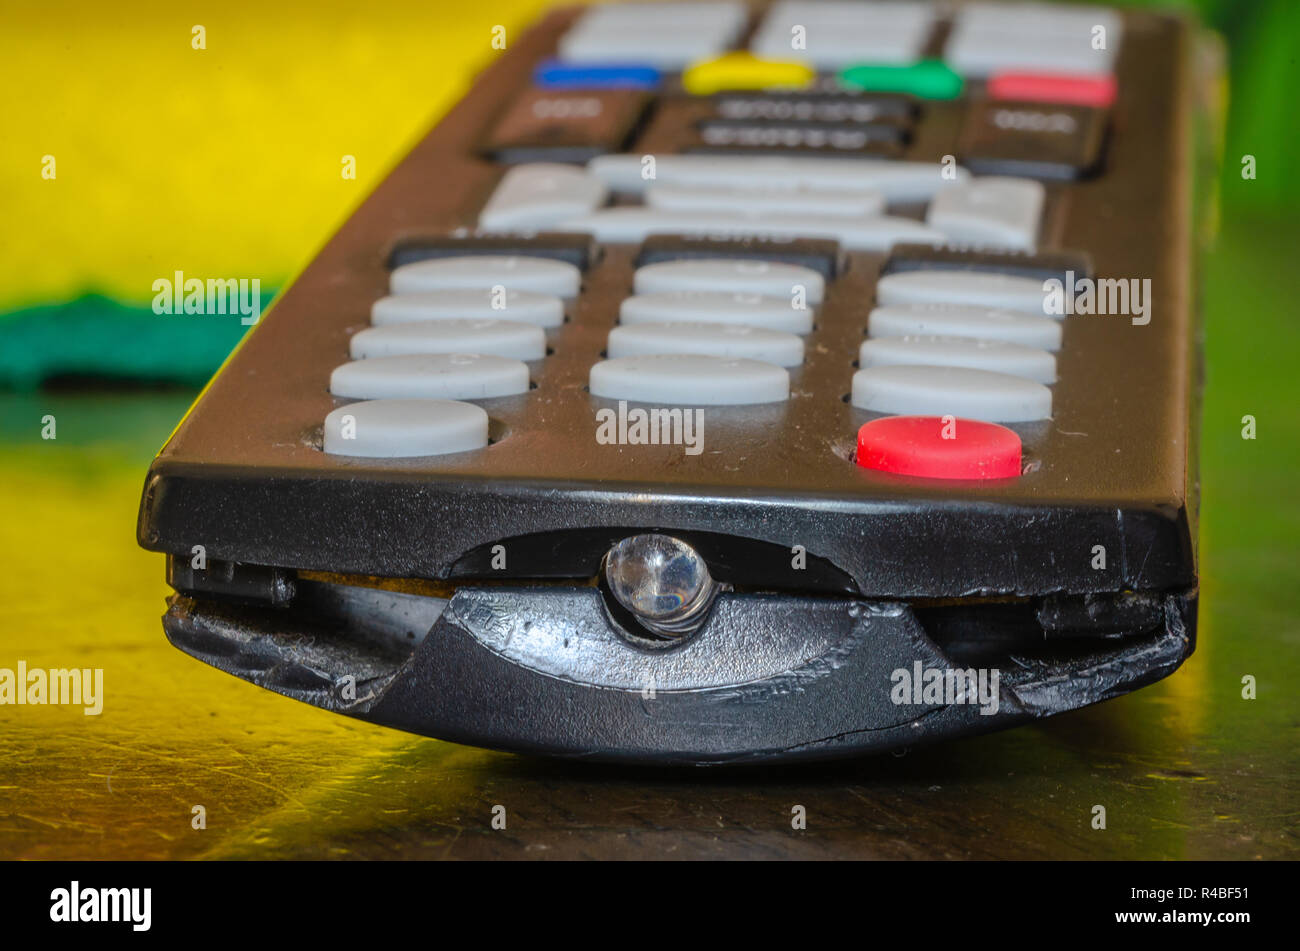 Closeup of Broken TV Remote Control Stock Photo